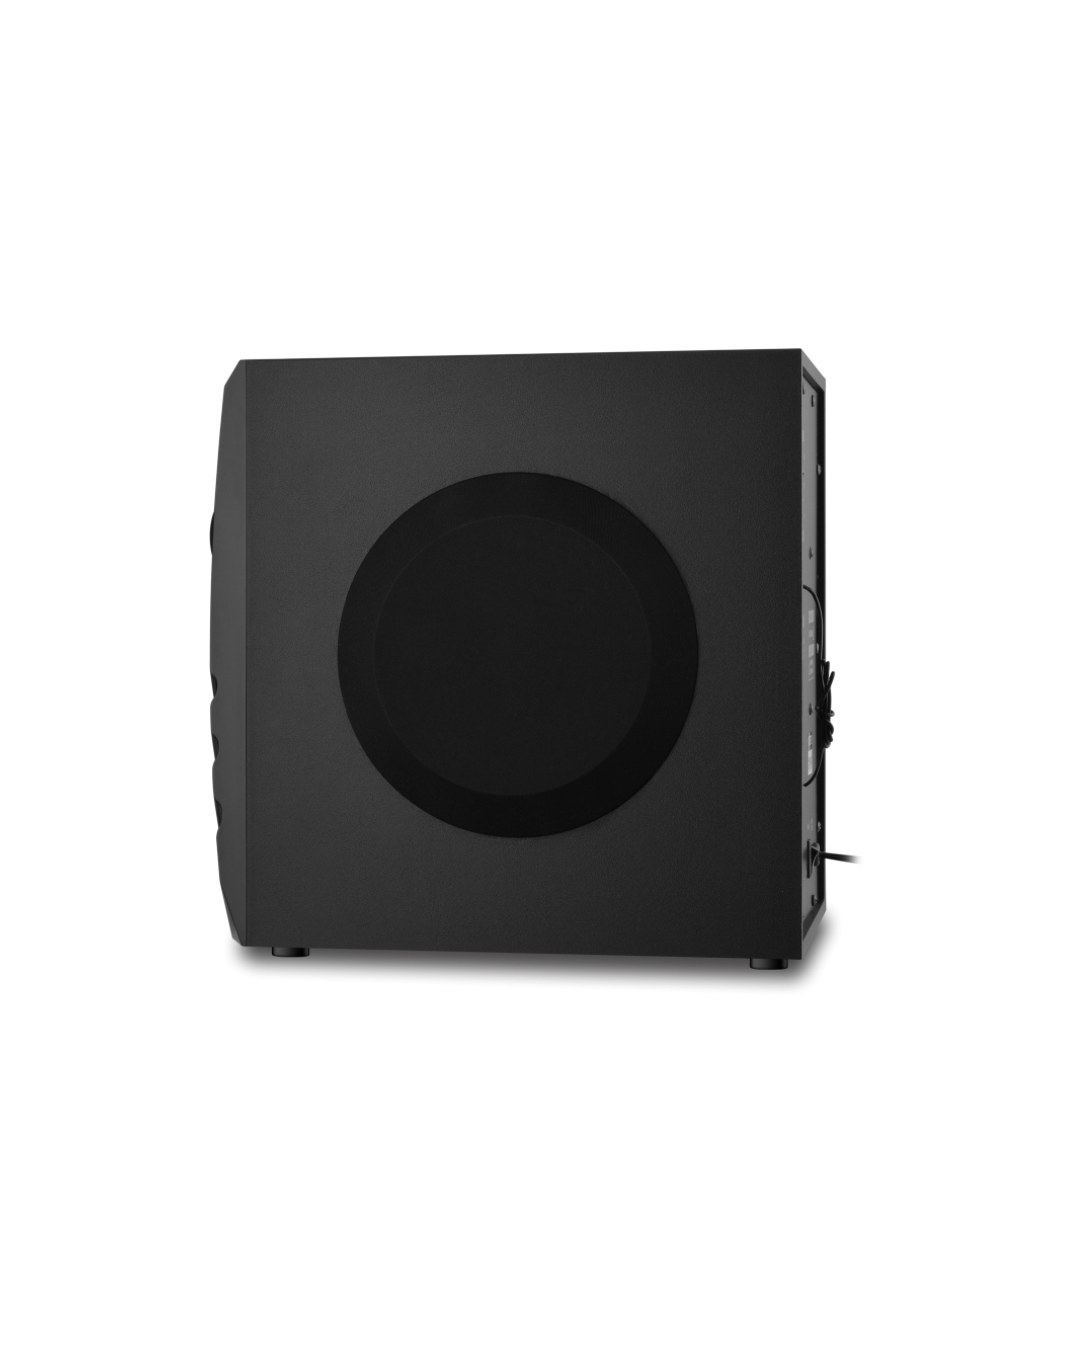 TKI-444 | 4.1 Multimedia Speaker System